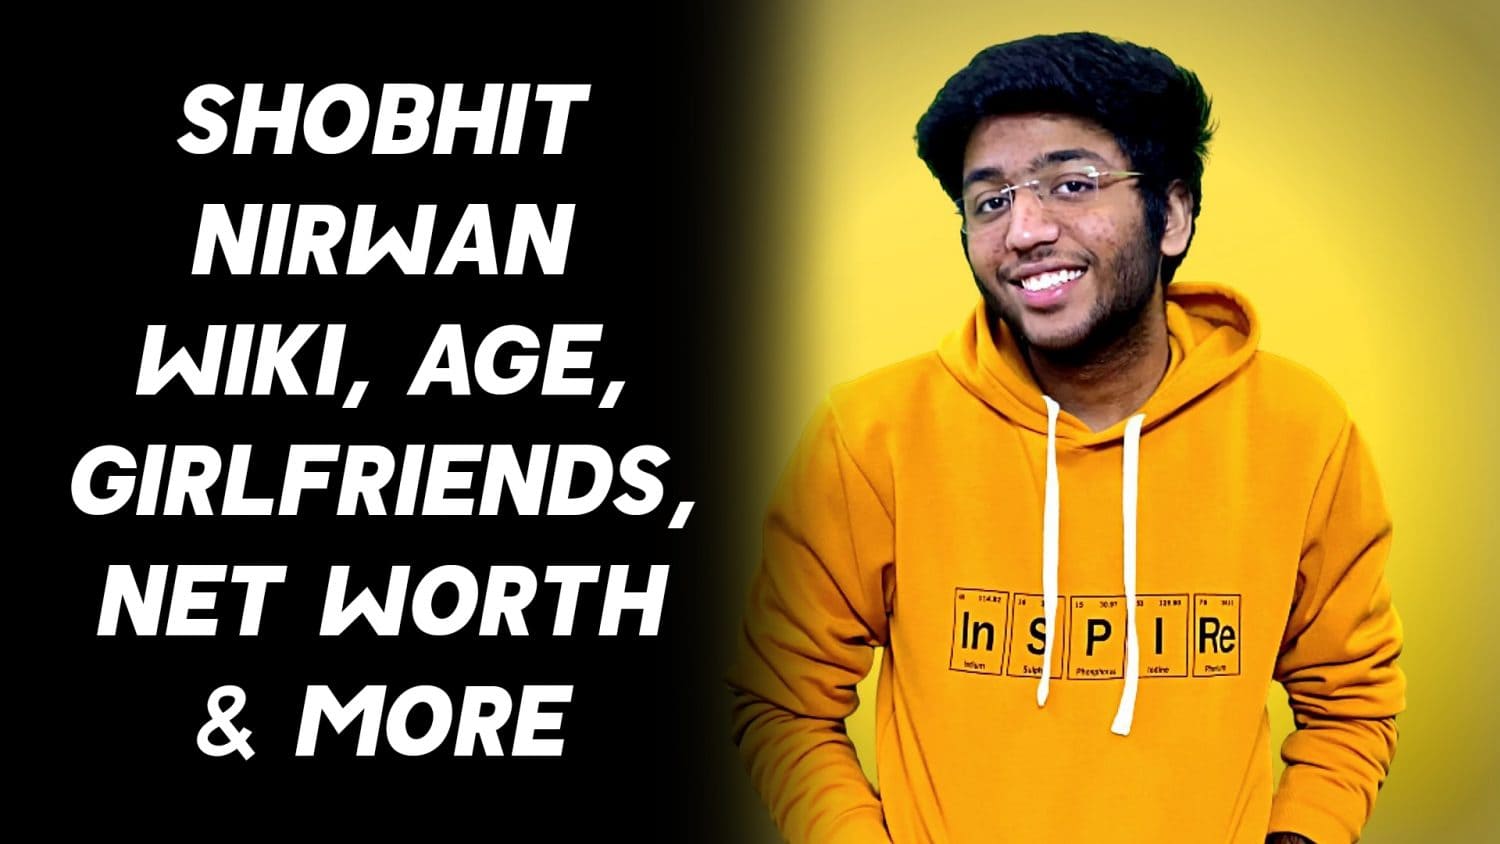 Shobhit Nirwan Wiki, Age, Girlfriends, Net Worth & More 1